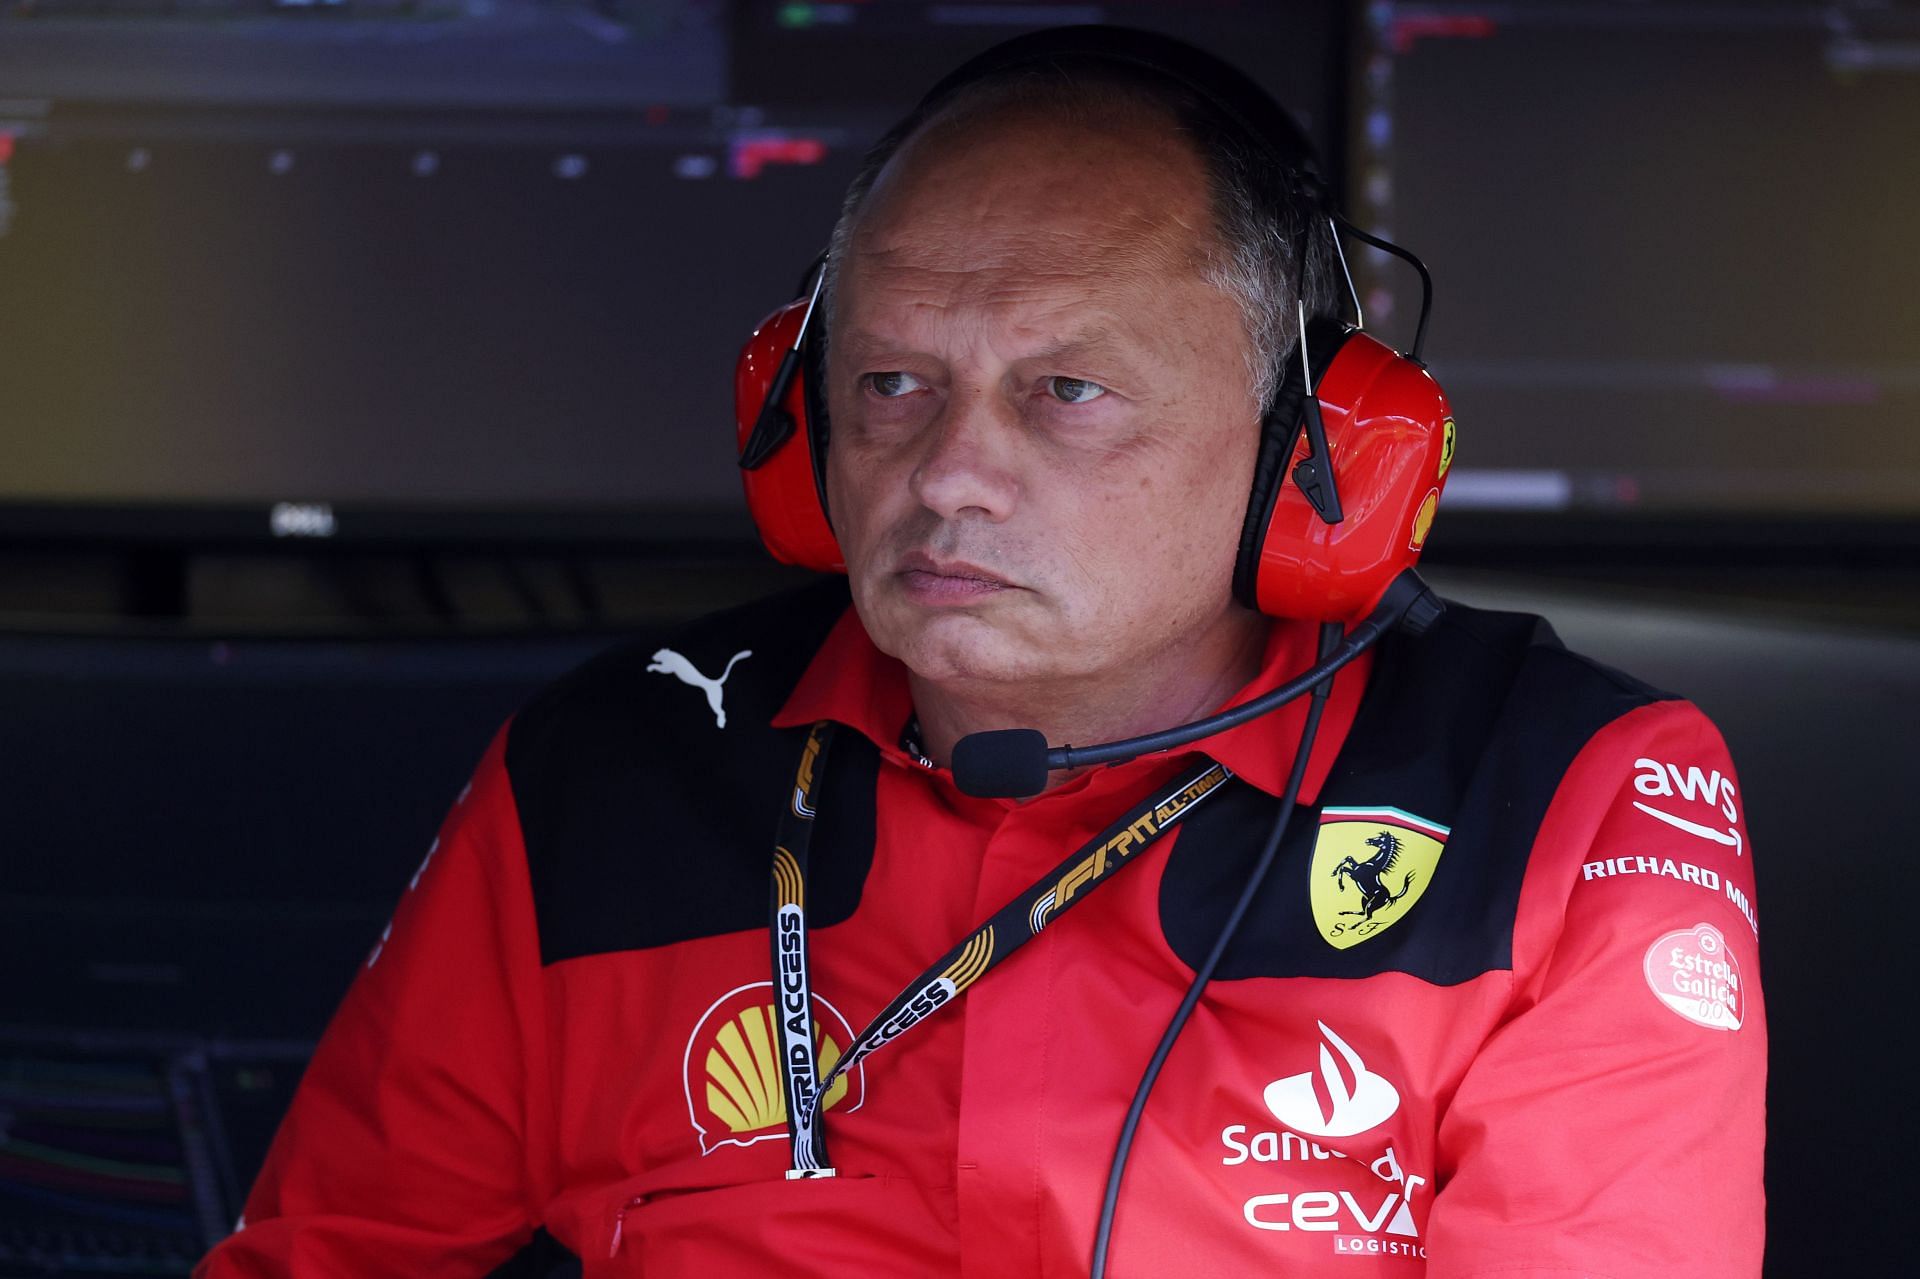 F1 Grand Prix of Bahrain - Ferrari team principal Frederic Vasseur